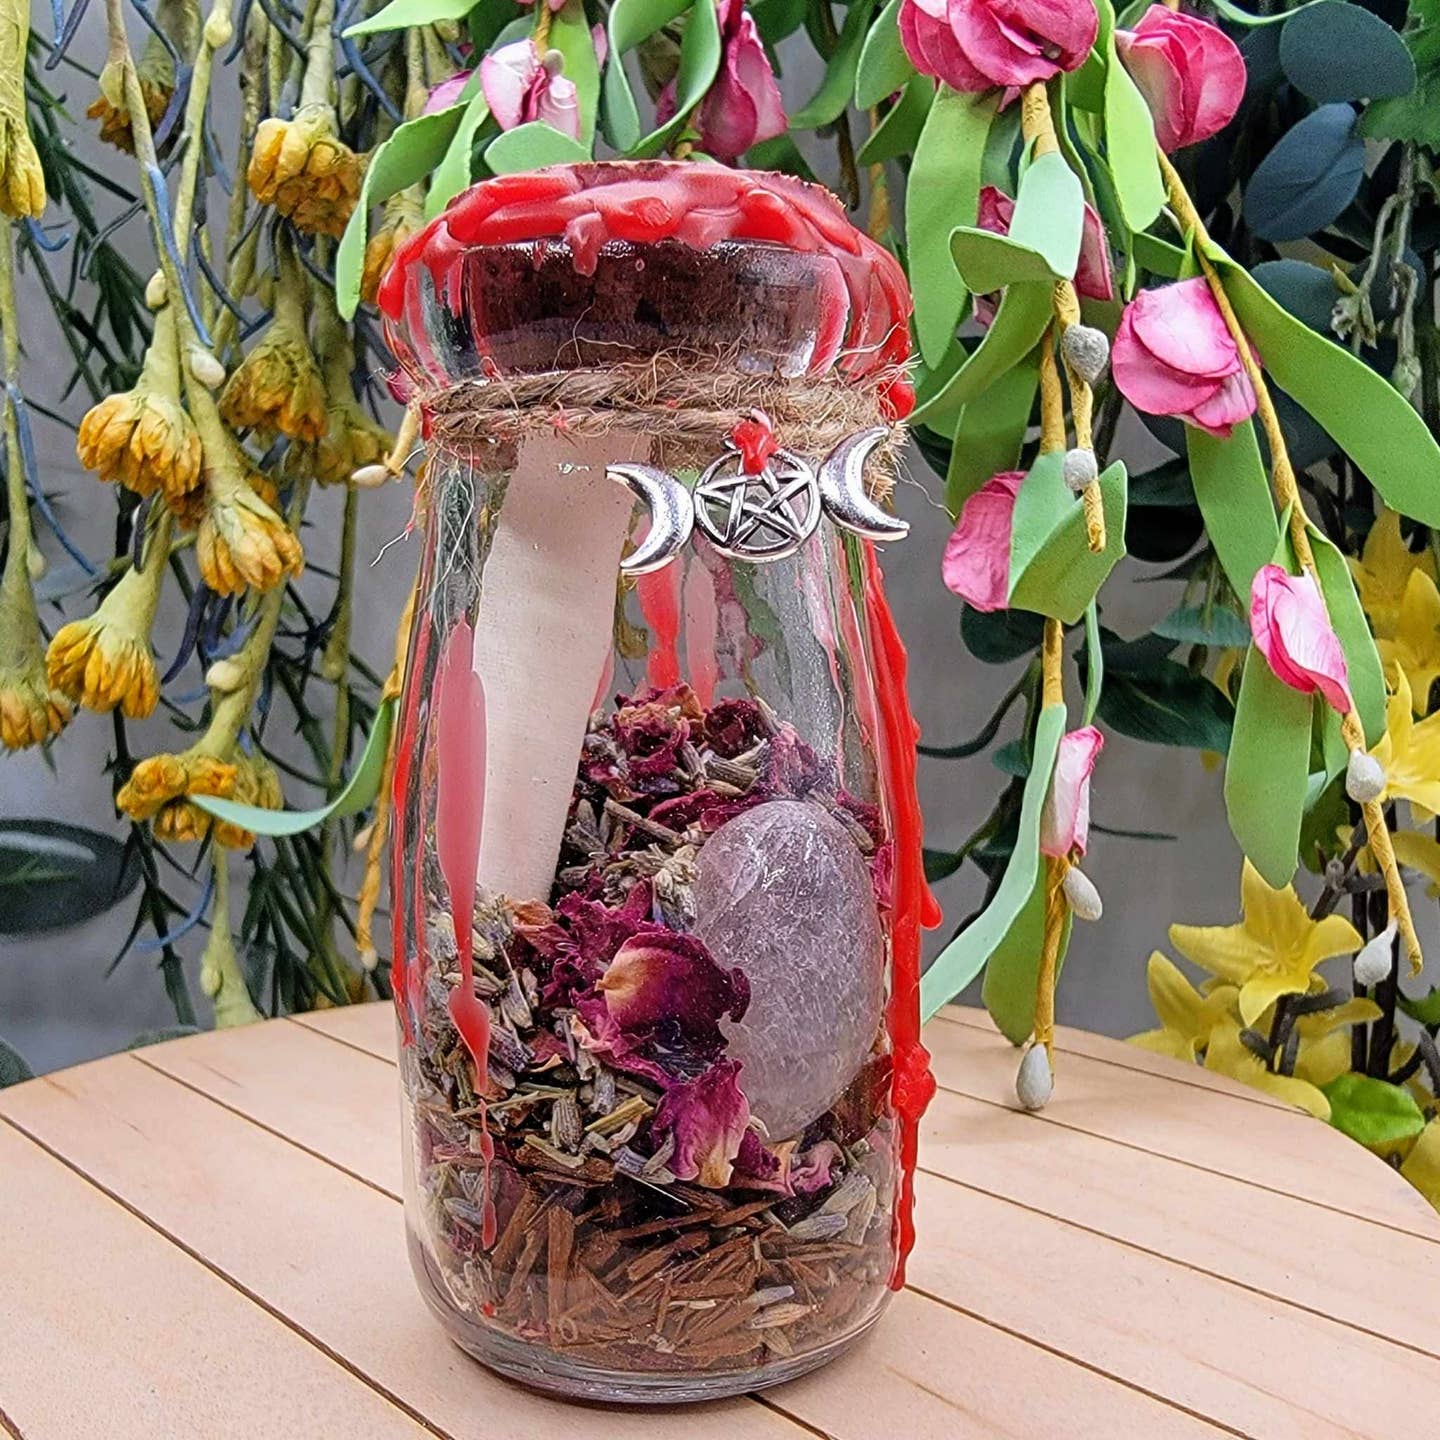 Intention Jar DIY Kit - Love